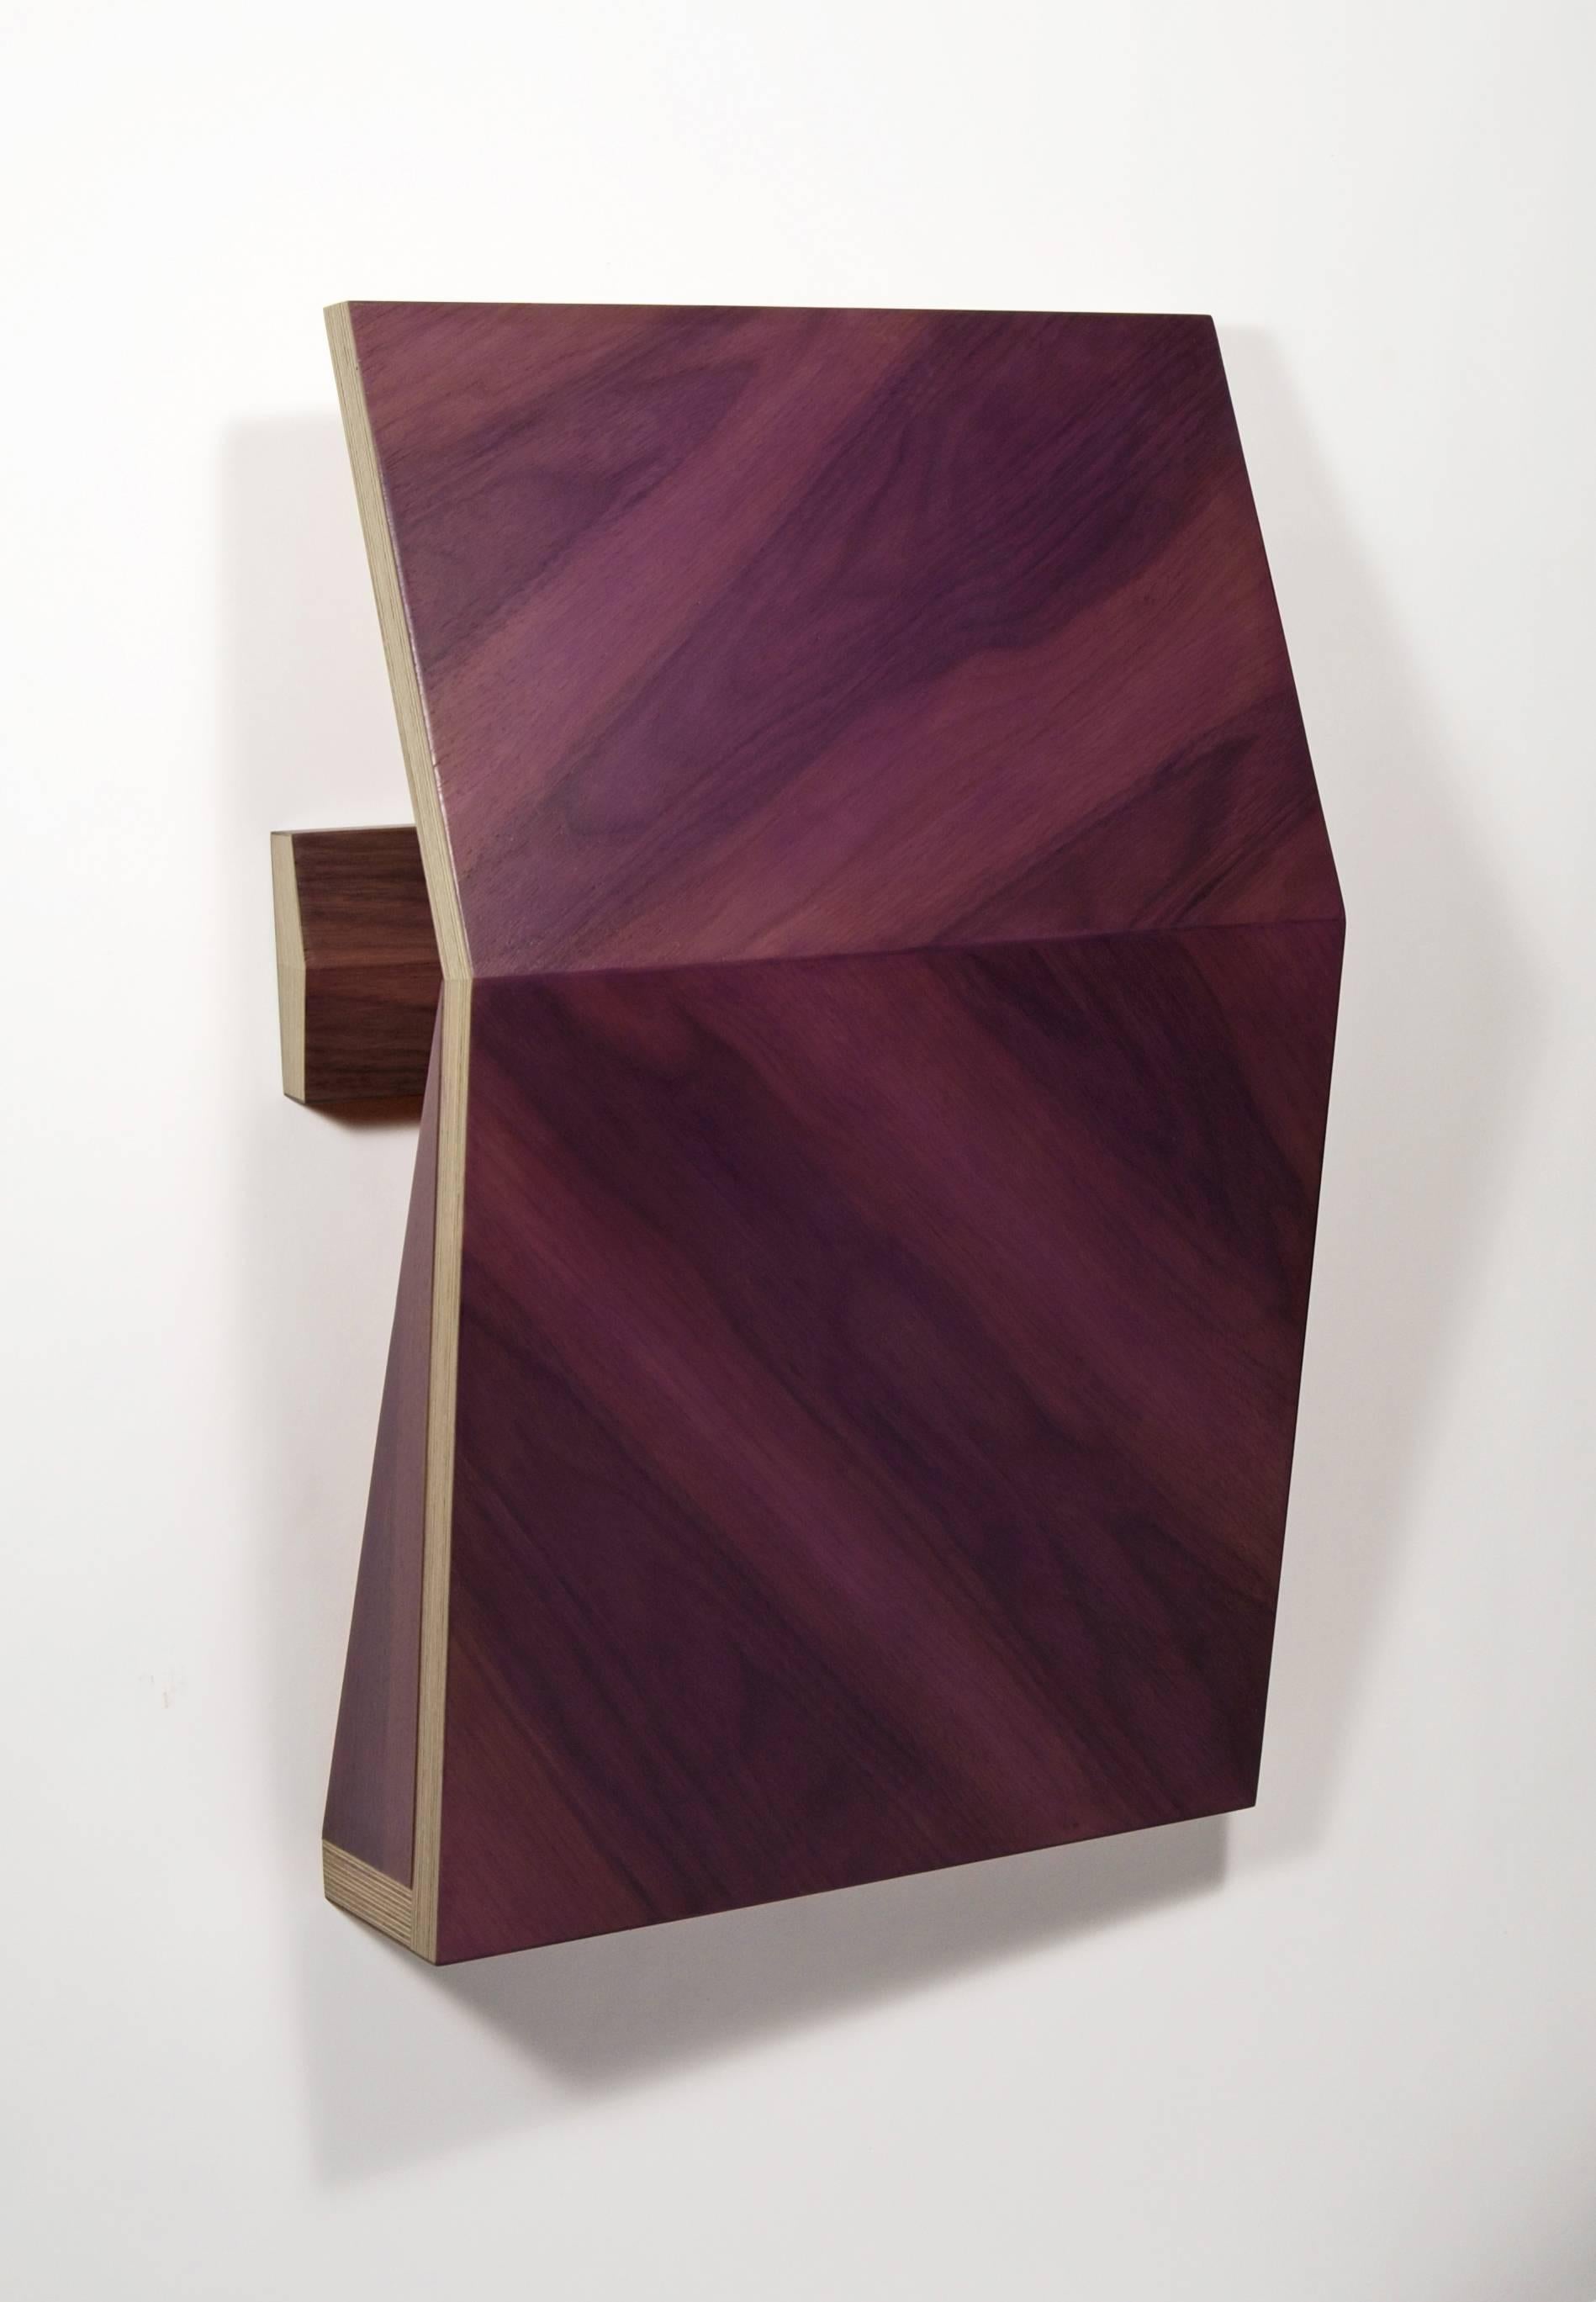 Richard Bottwin, 'Walnutto', 2015, Wood, Acrylic Paint 